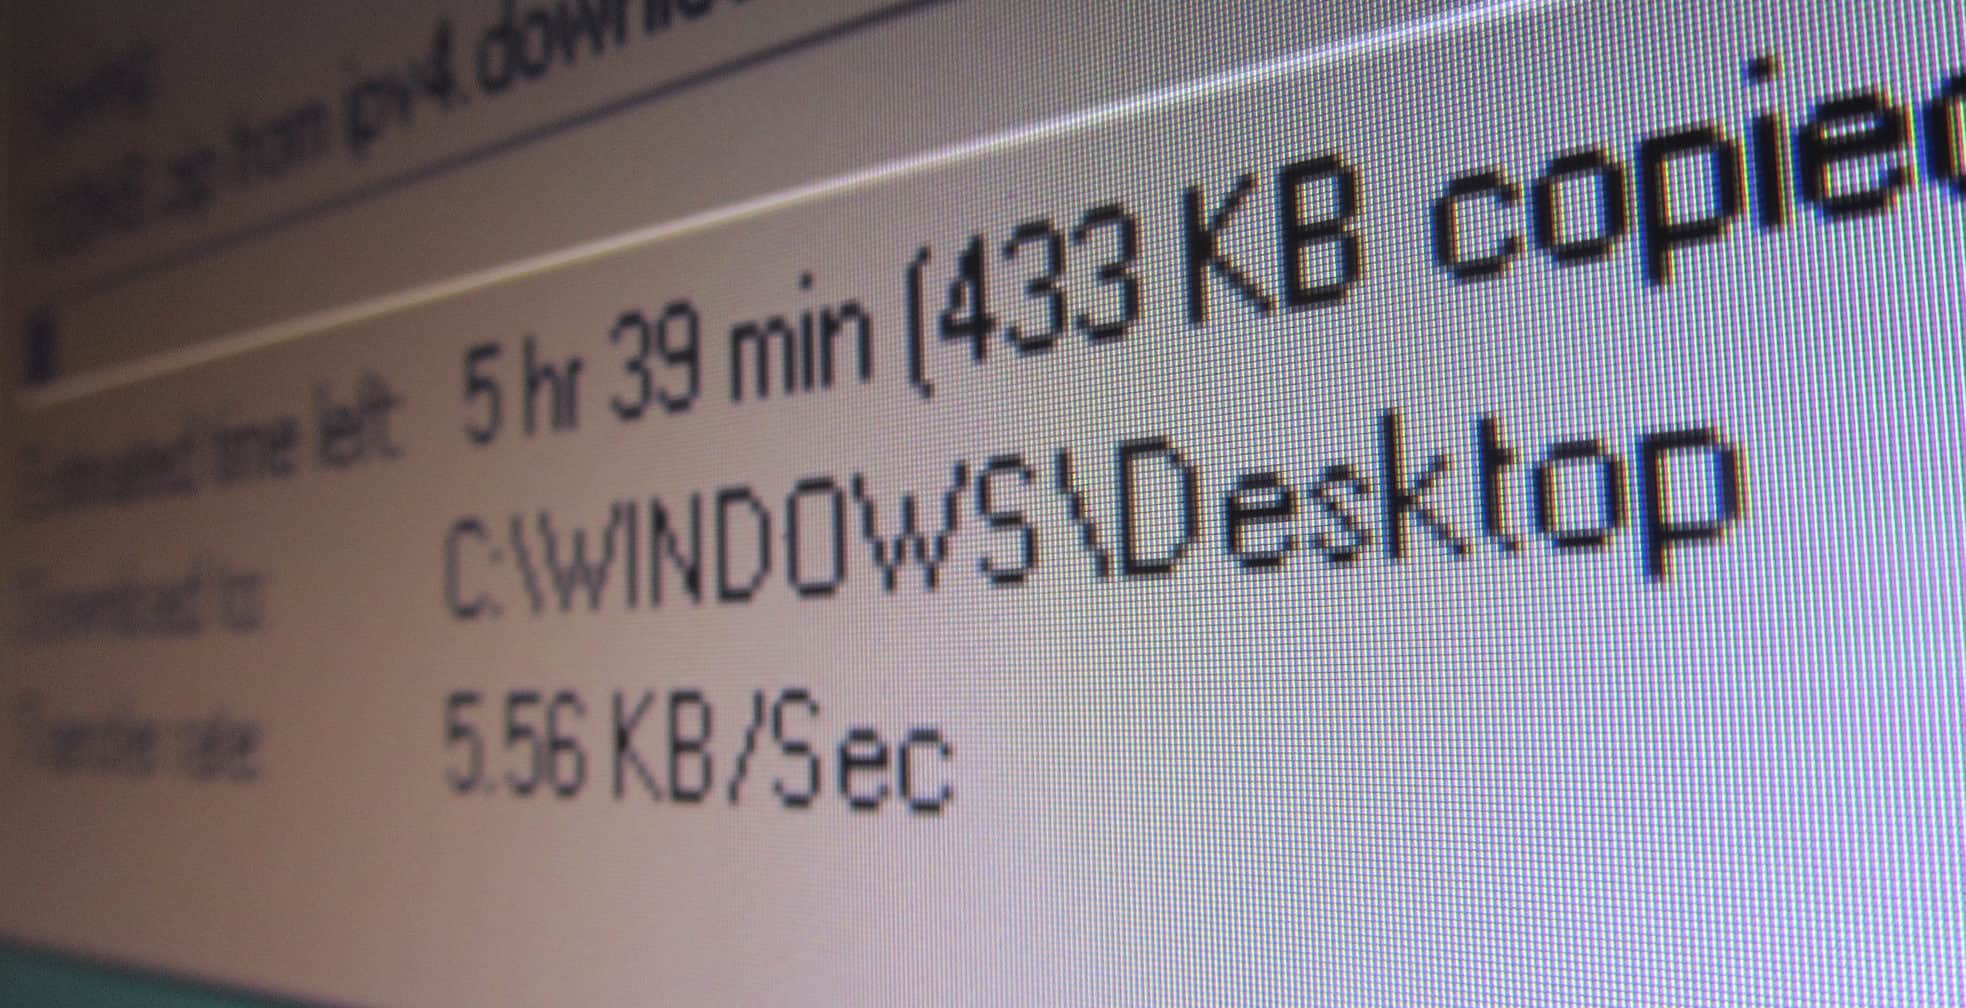 Slow download speed